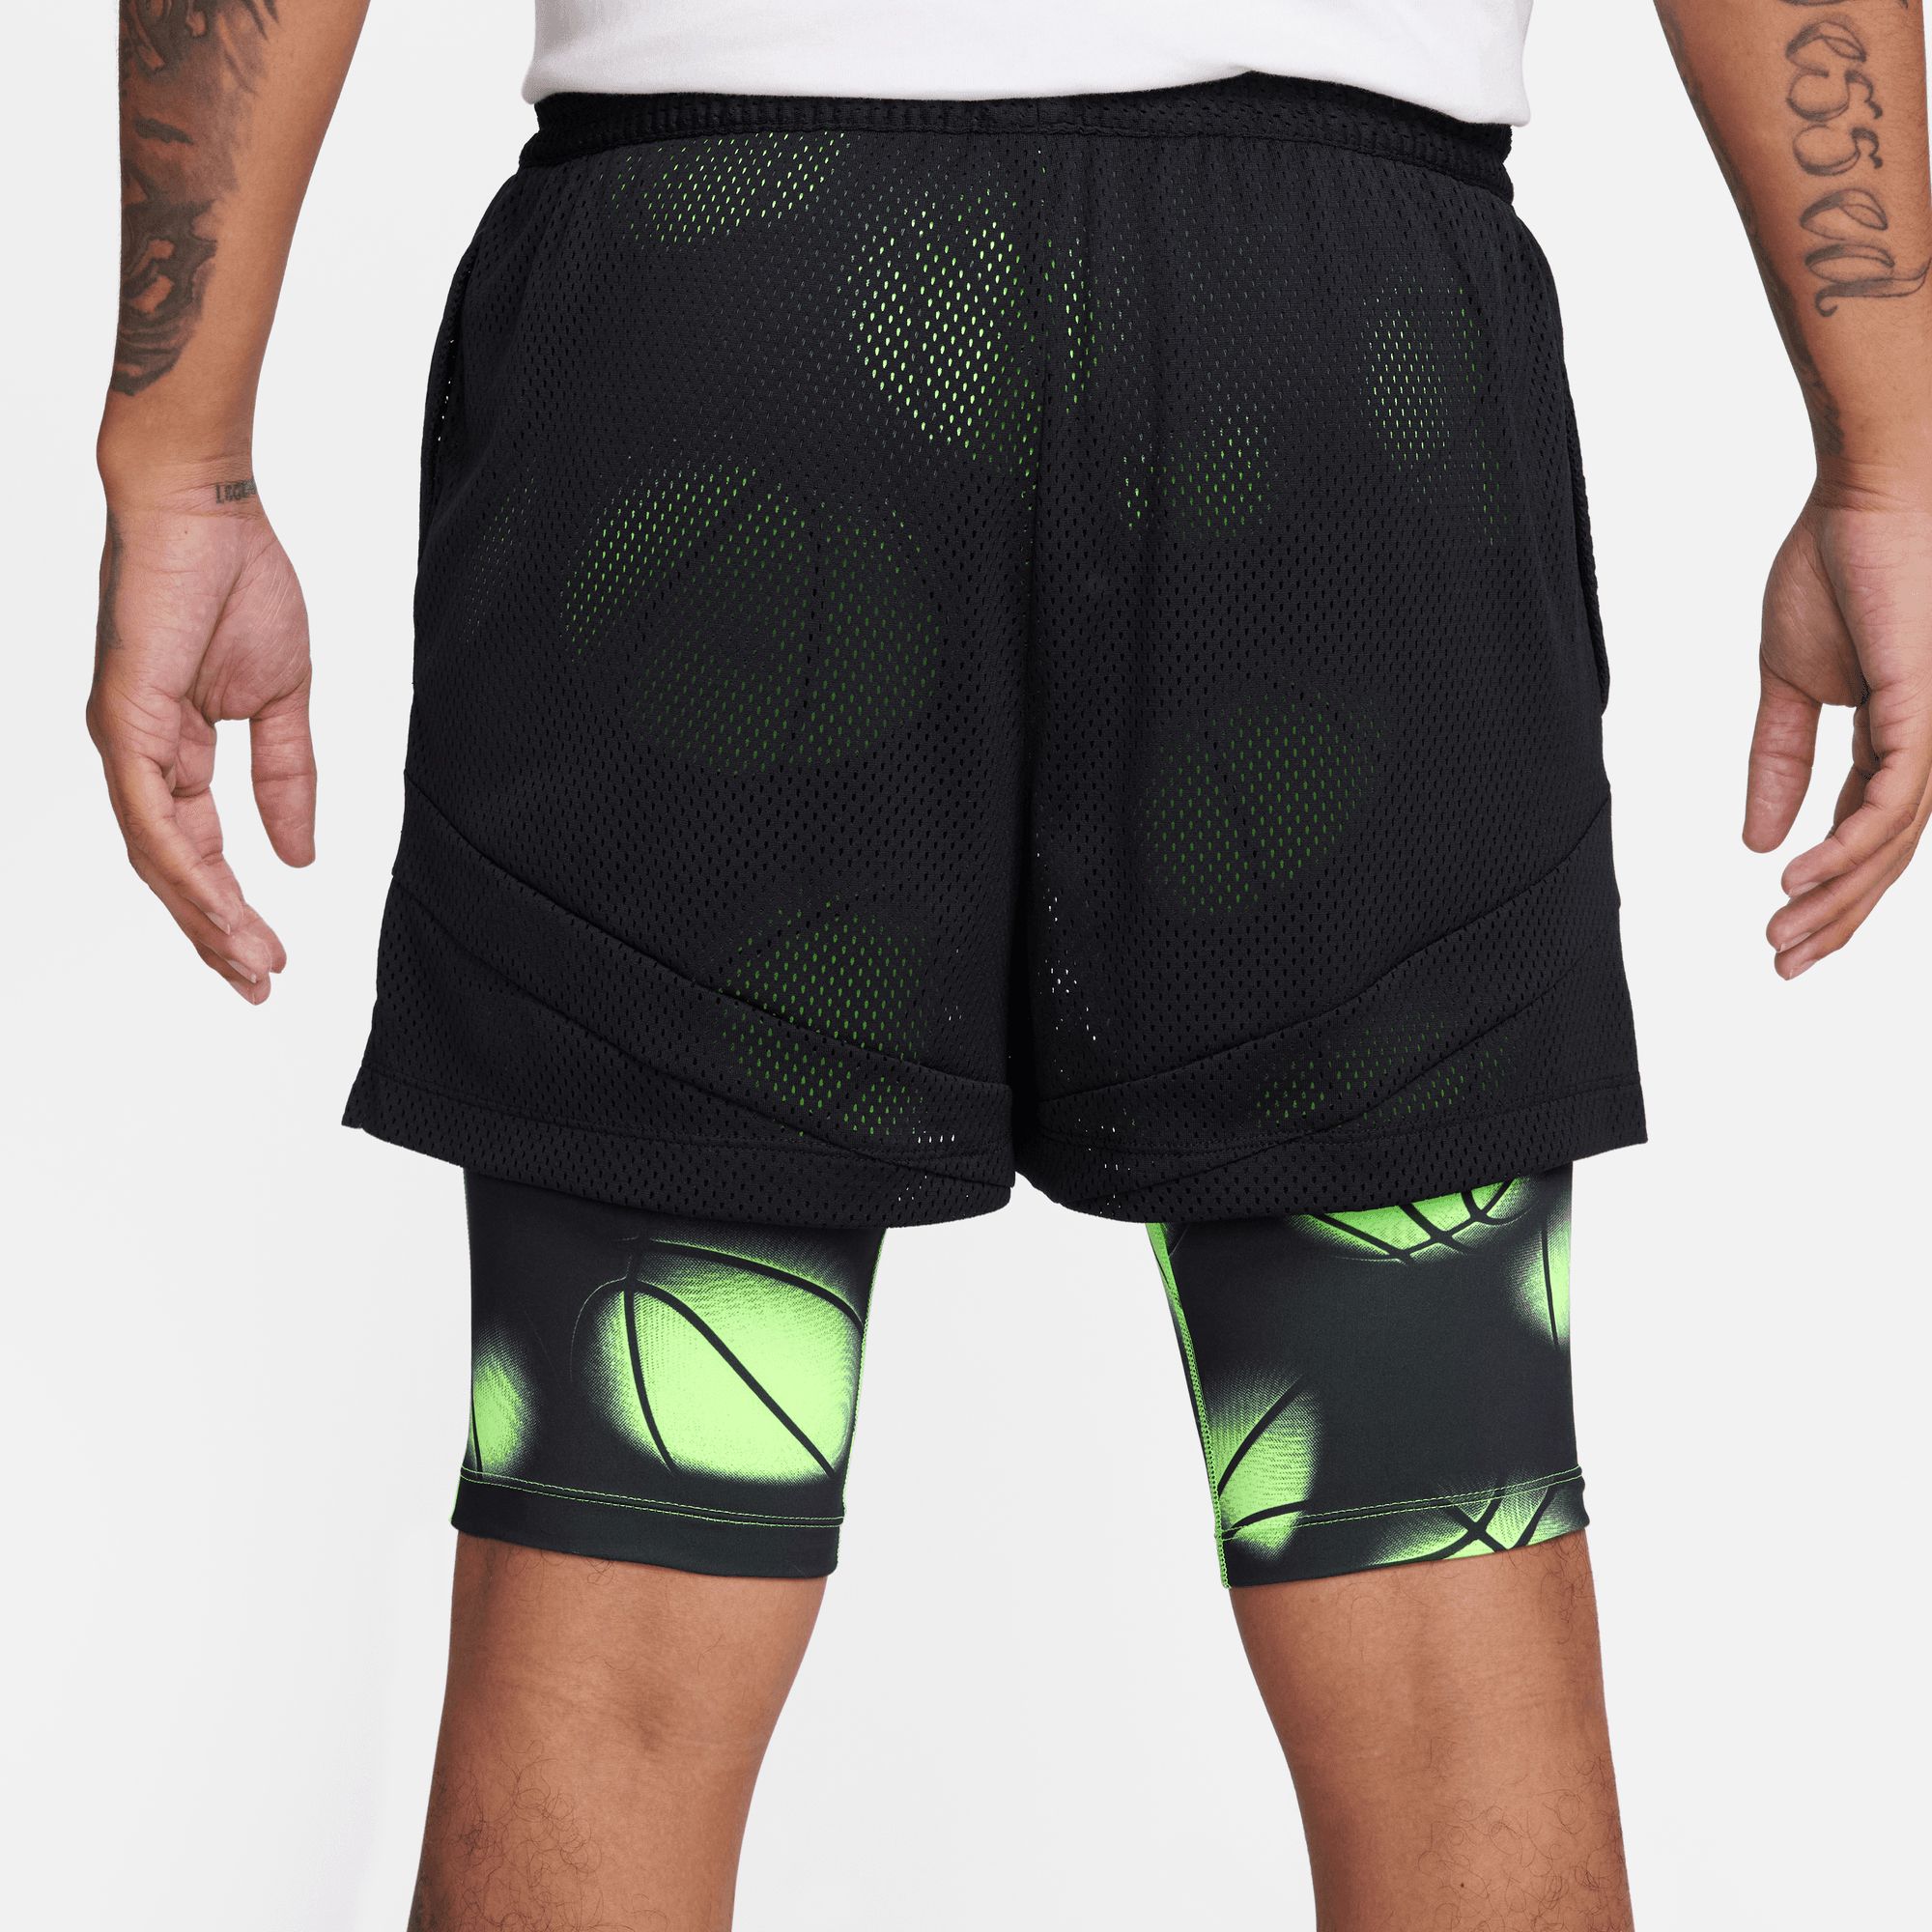 Nike Men's Ja Morant Dri-FIT 2-in-1 4'' Basketball Shorts